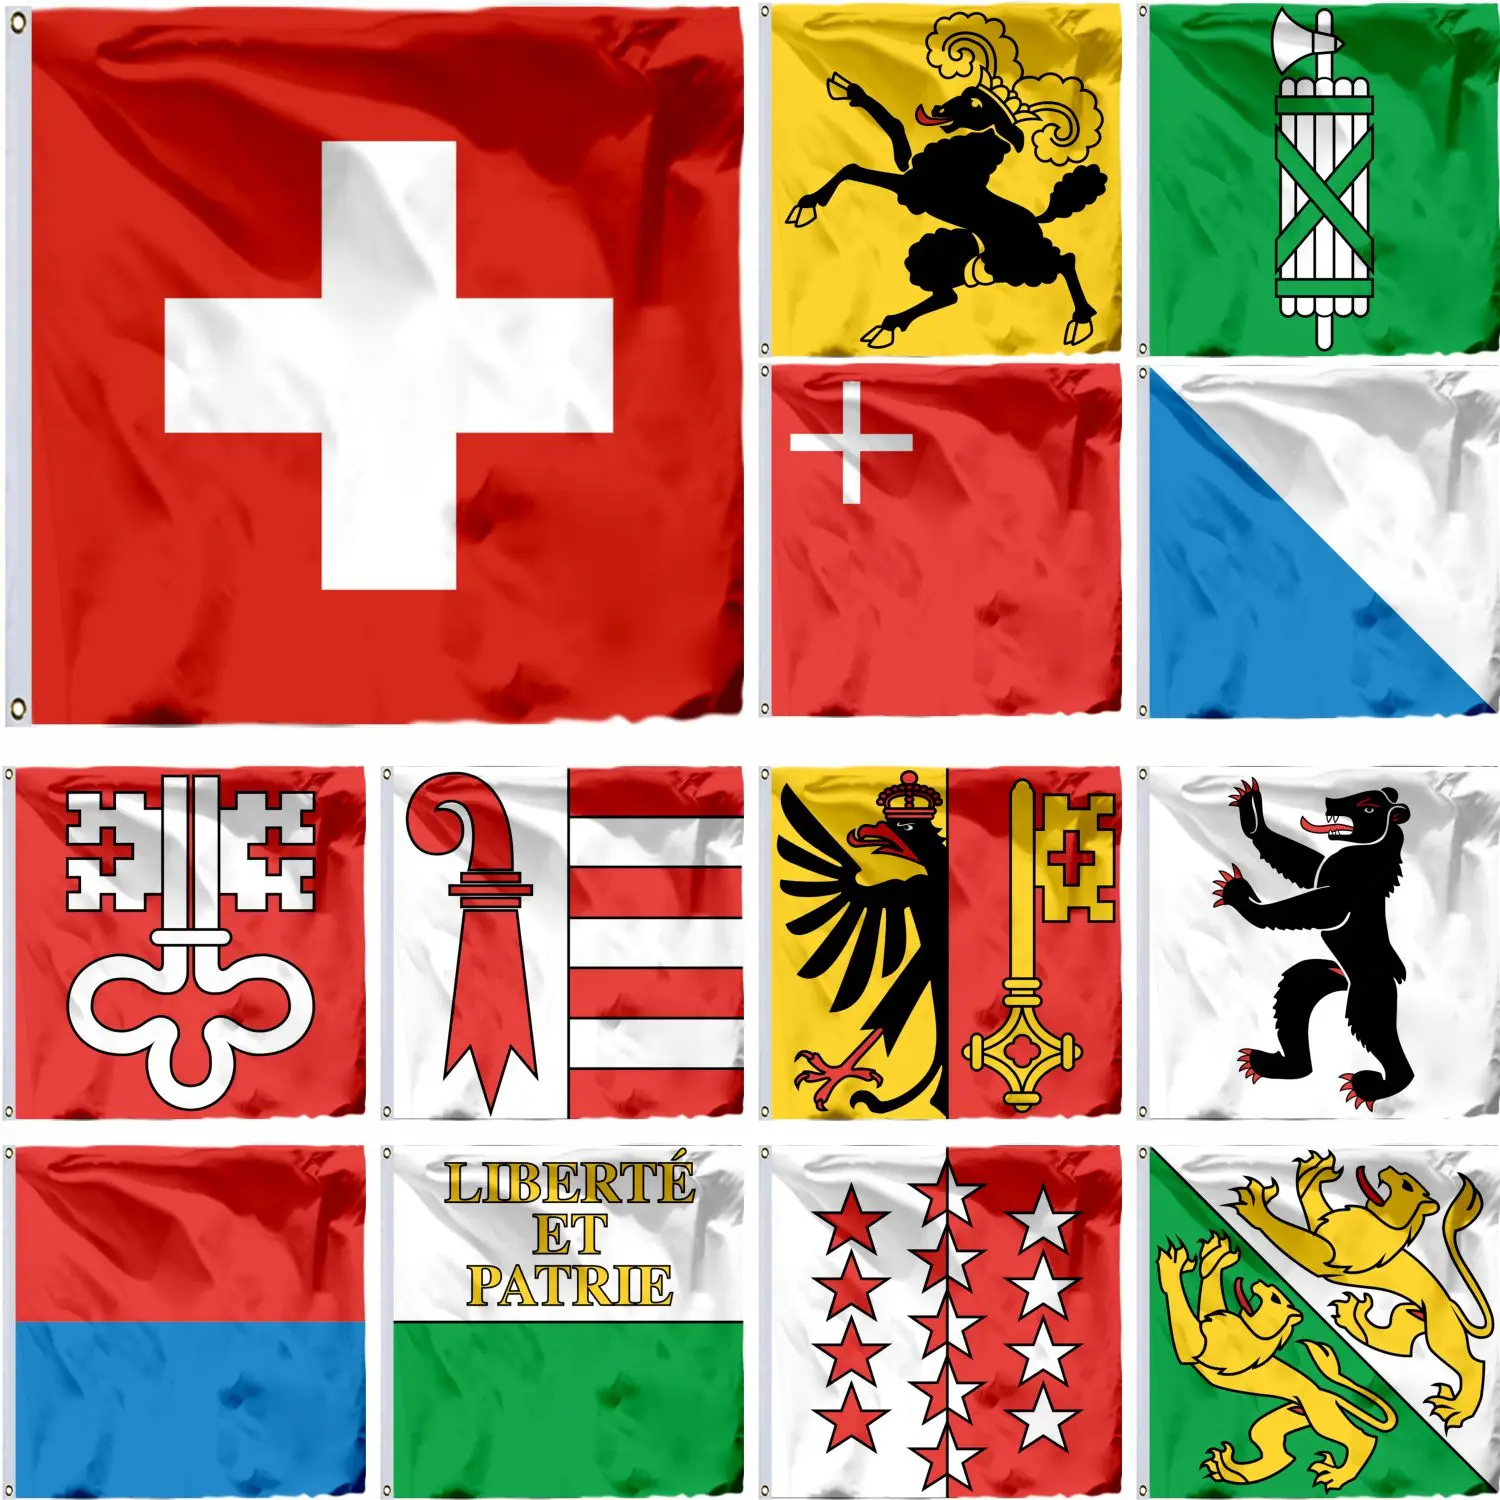 Appenzell Innerrhoden Hissflagge 120 x 120 cm Flagge Fahne Schweiz 